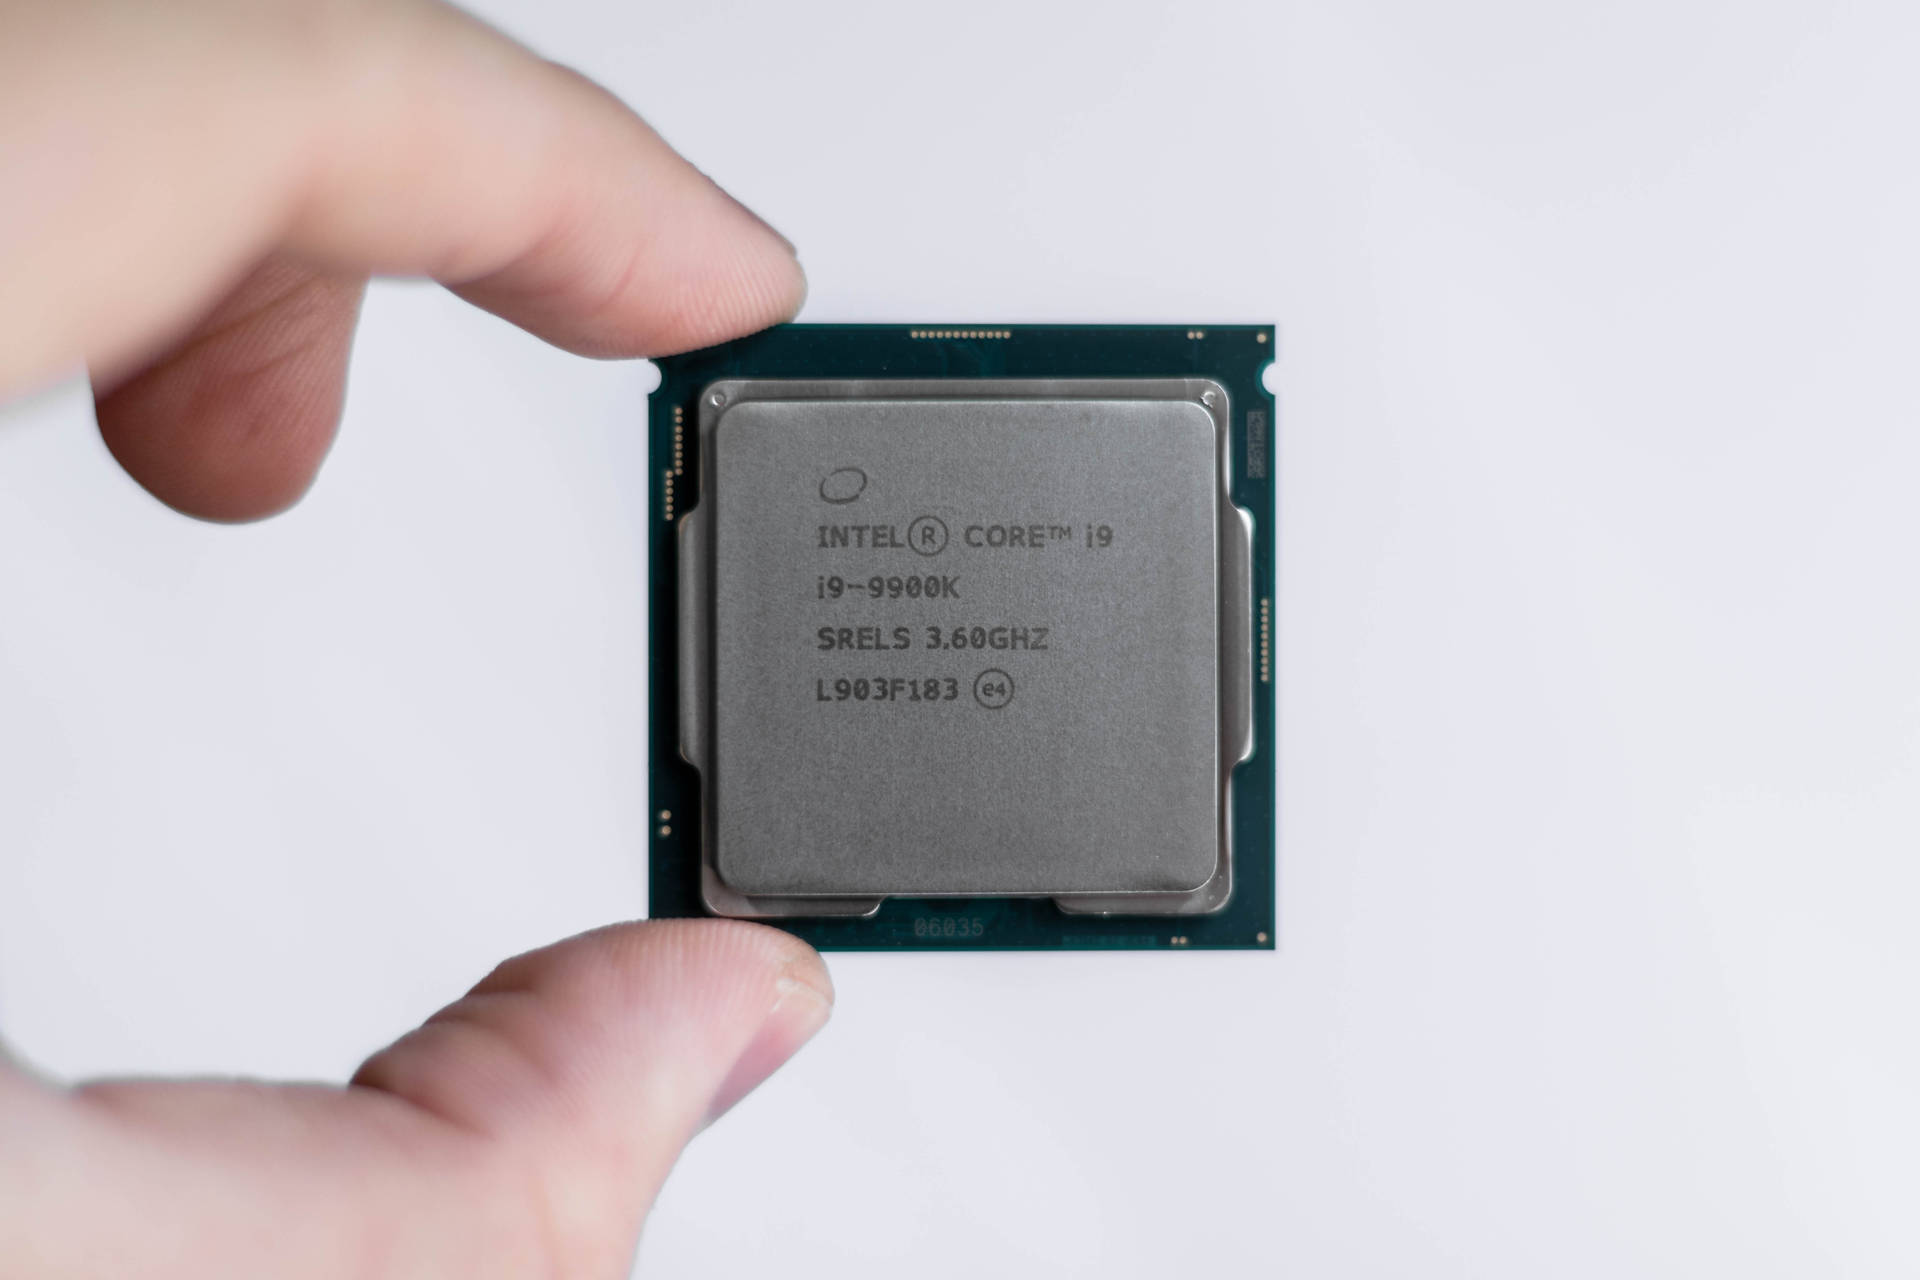 Intel Core I9 9900k Processor Background